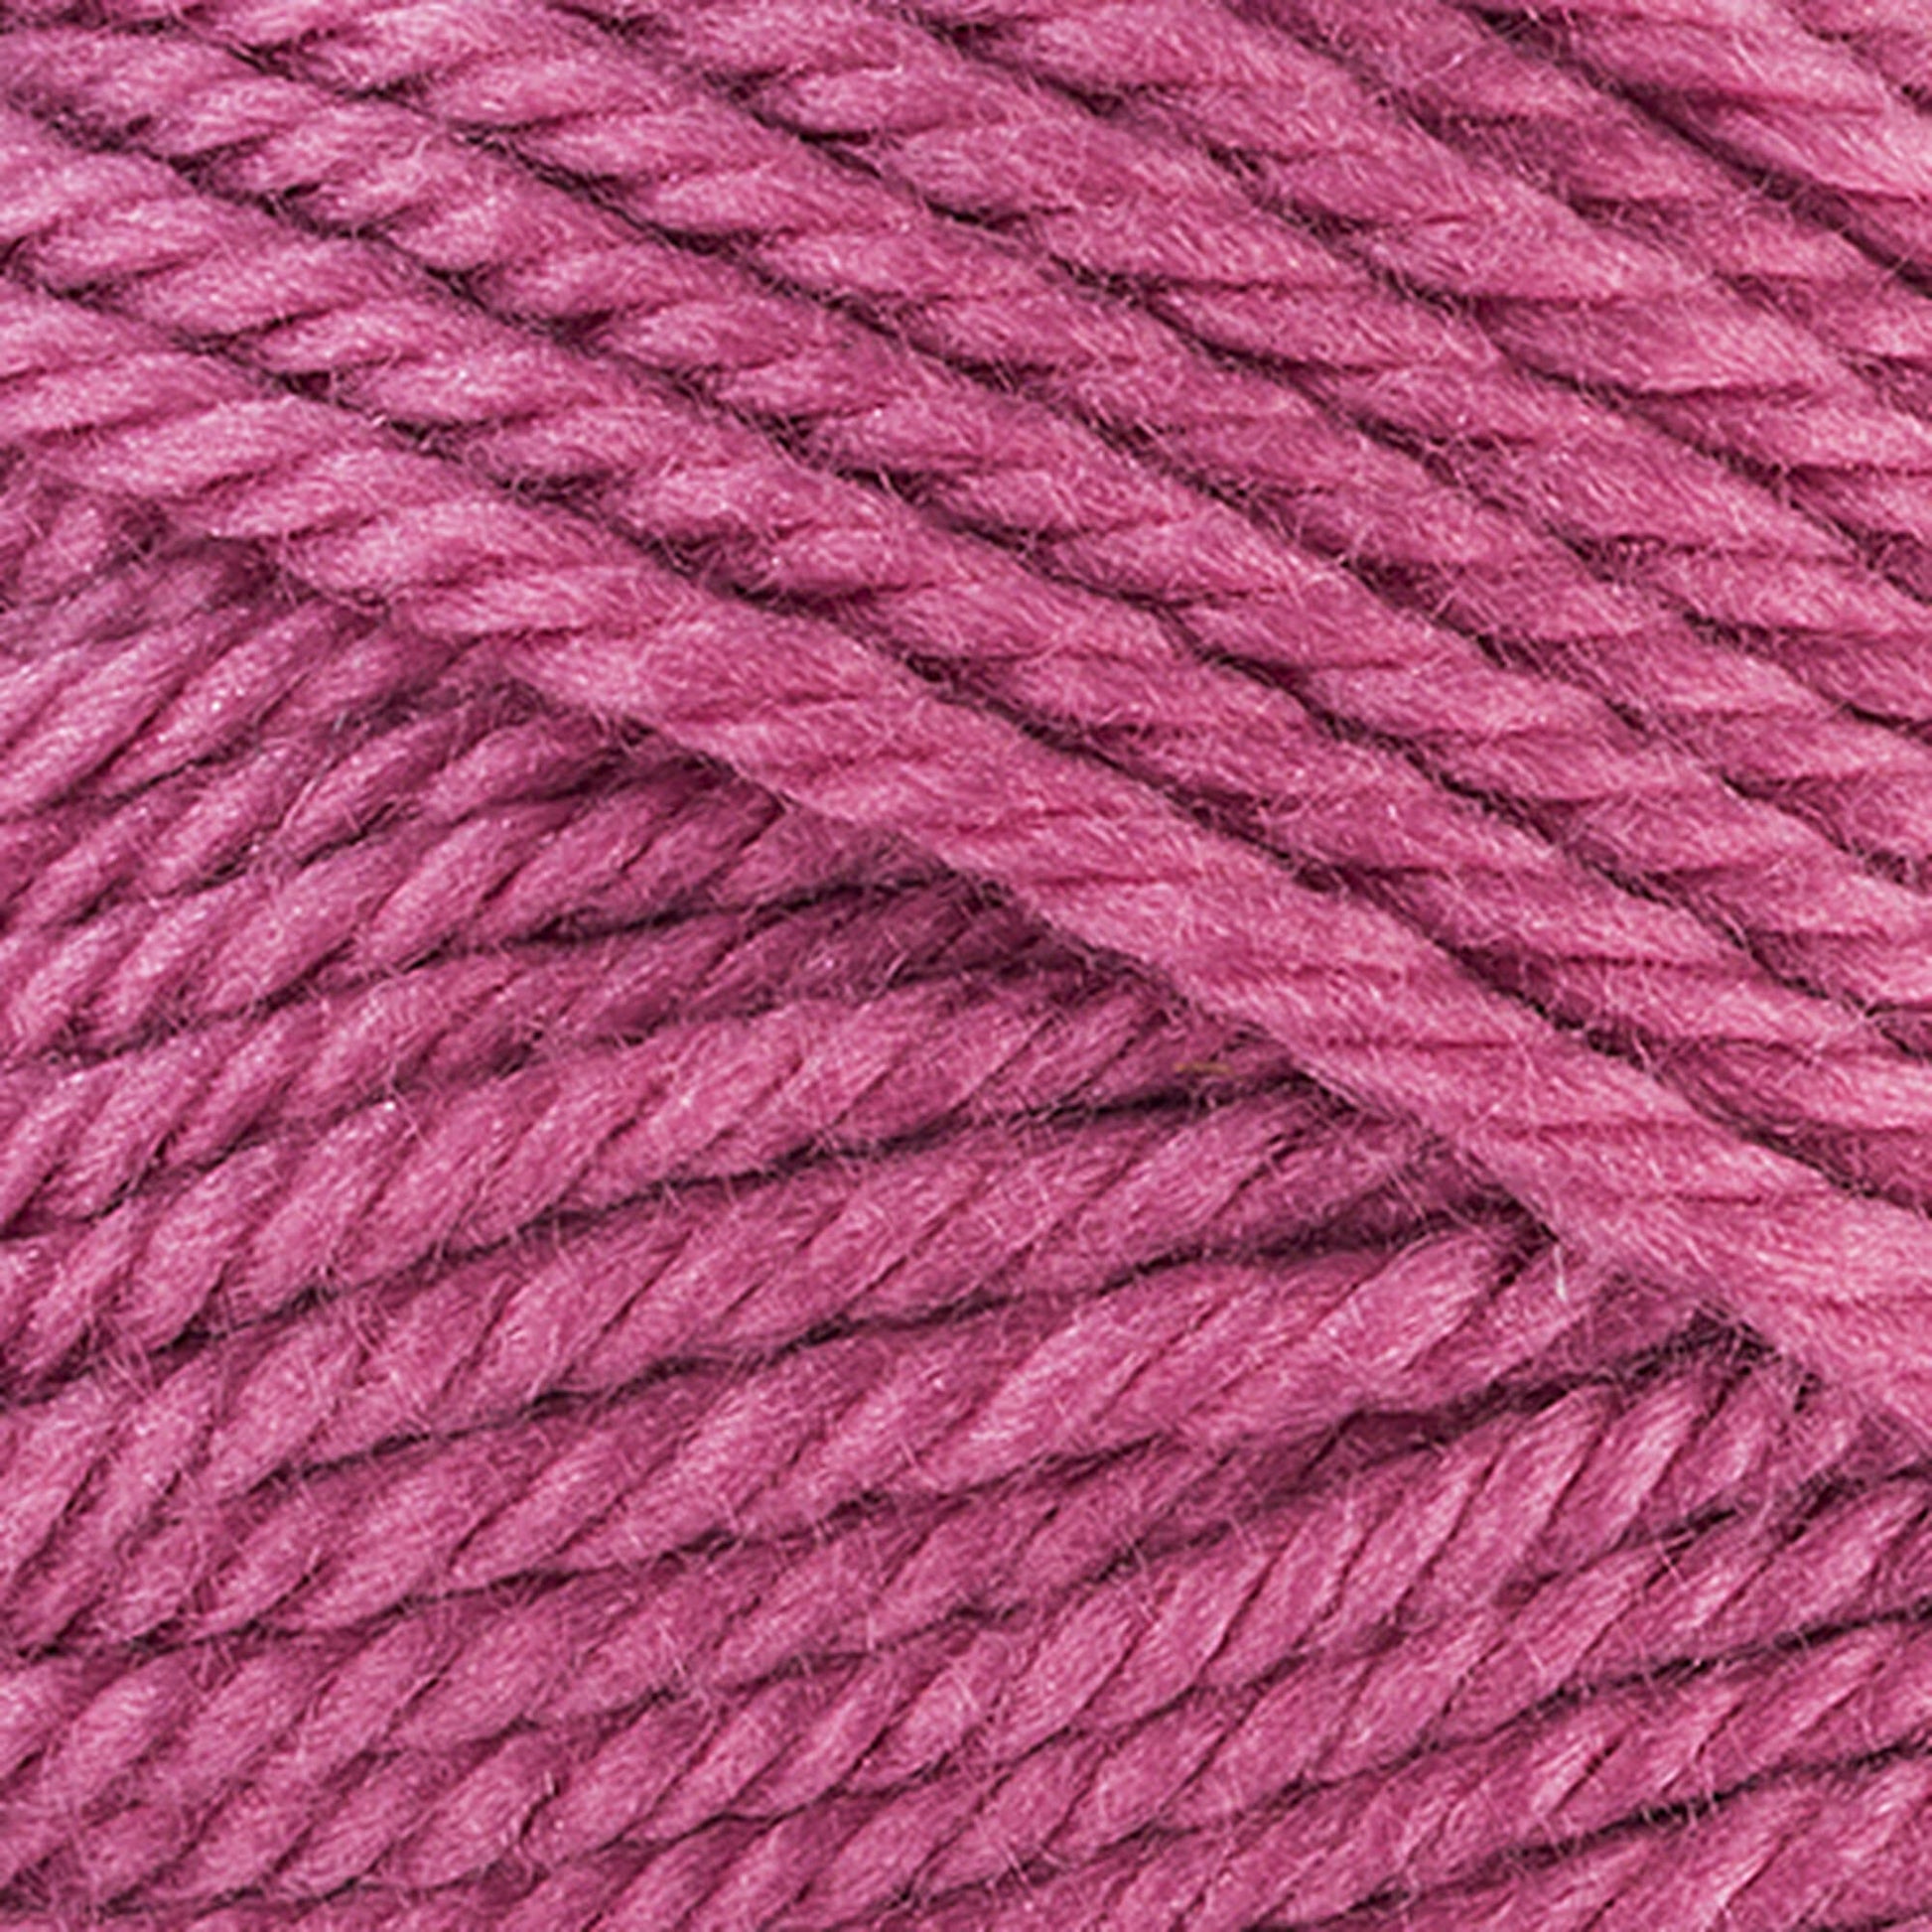 Red Heart Soft Essentials Yarn - Discontinued shades